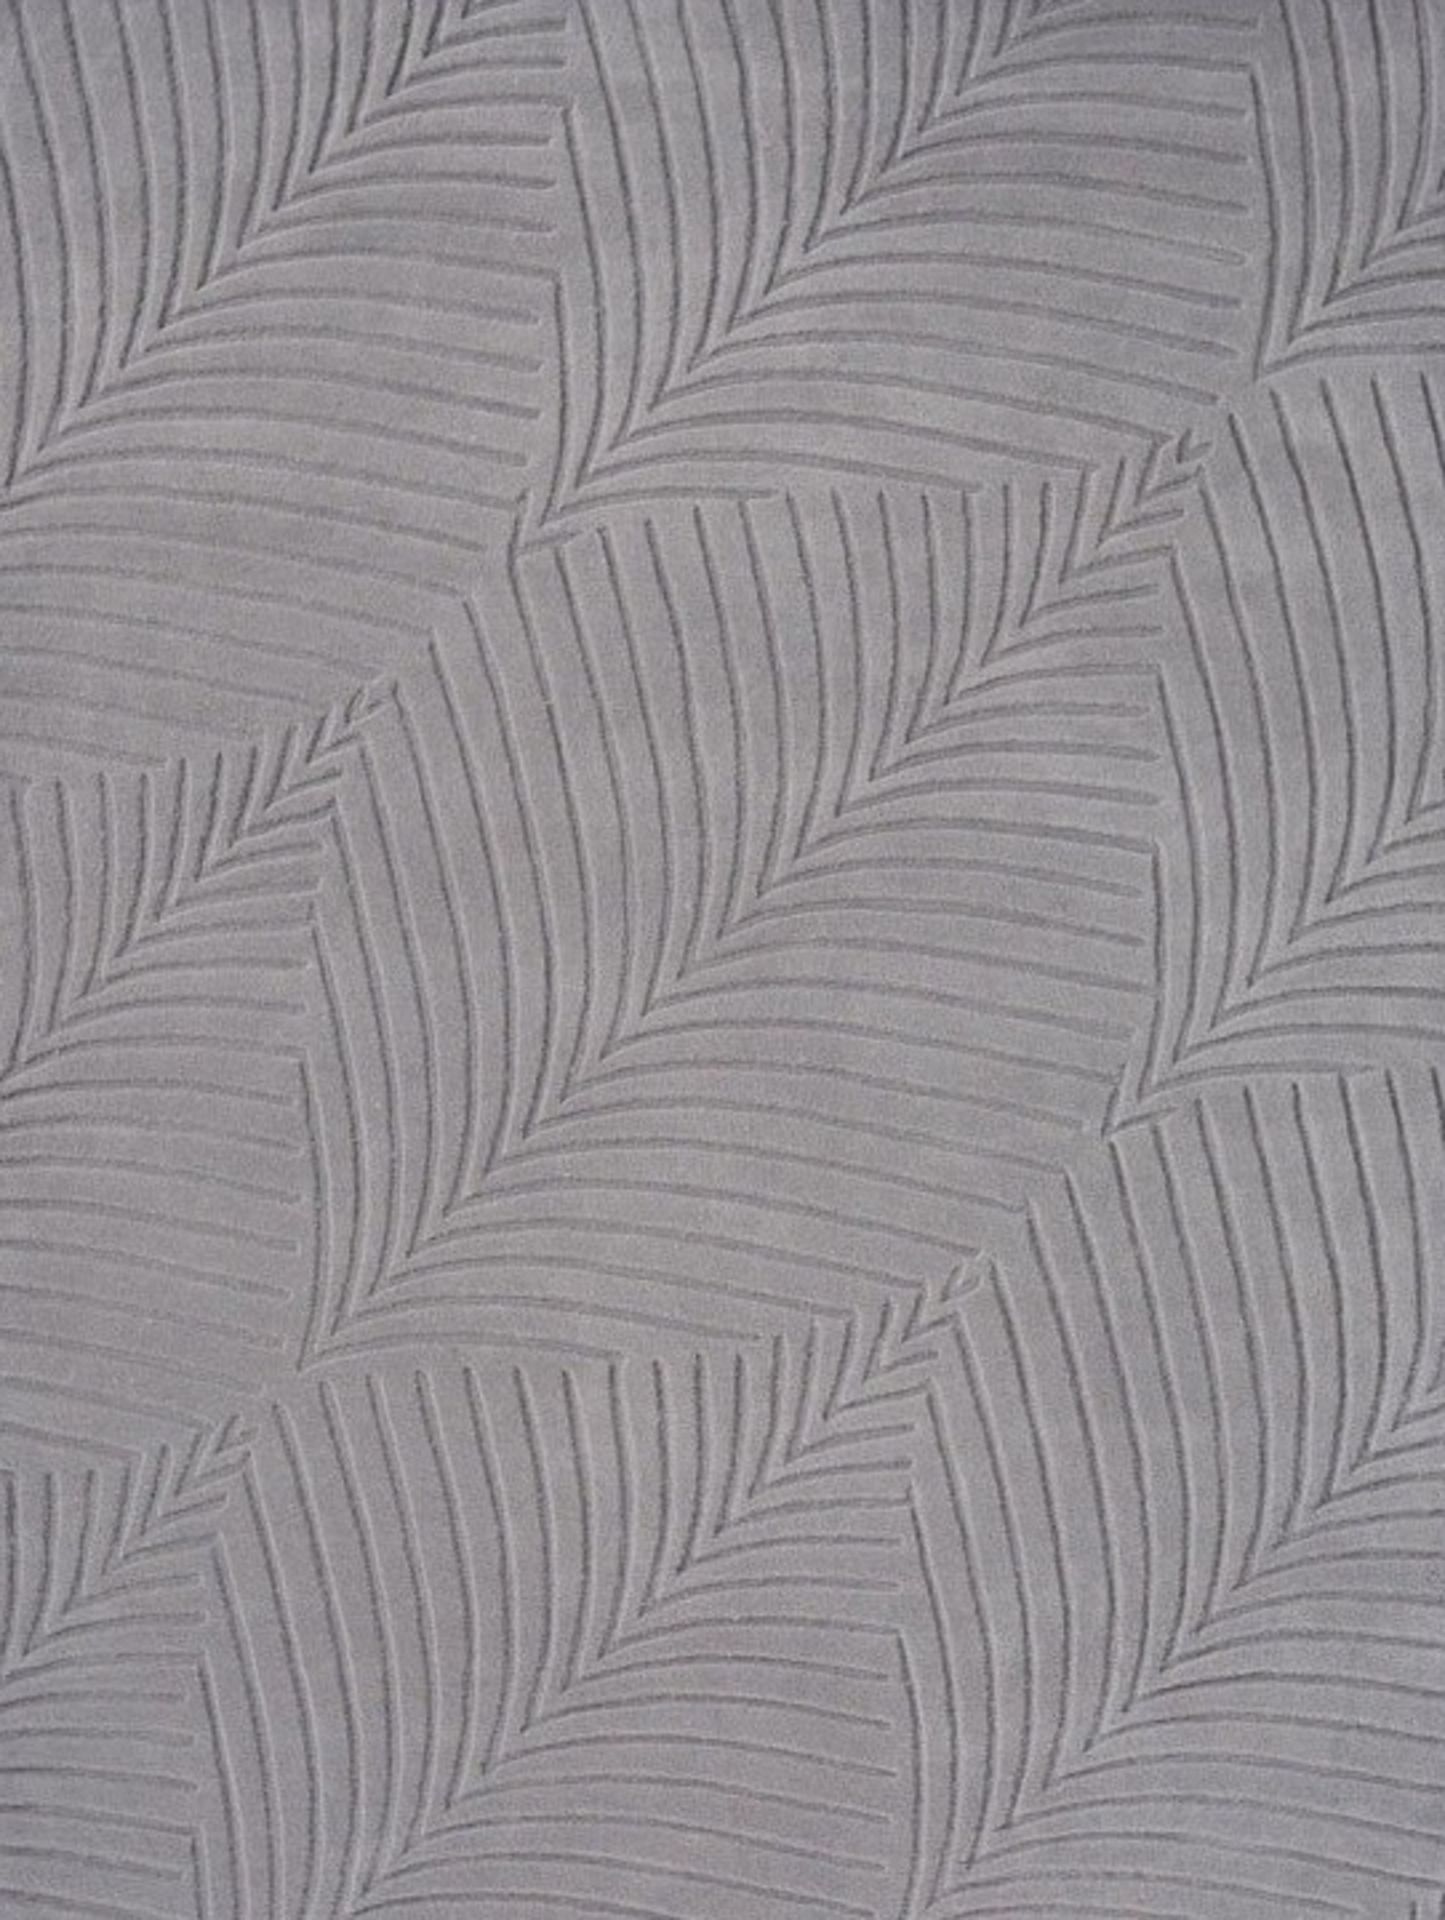 1 x Wedgwood FOLIA 100% Pure Wool Hand Tufted Rug - Size: 120 x 180cm - Original RRP £364.00 - Image 2 of 4